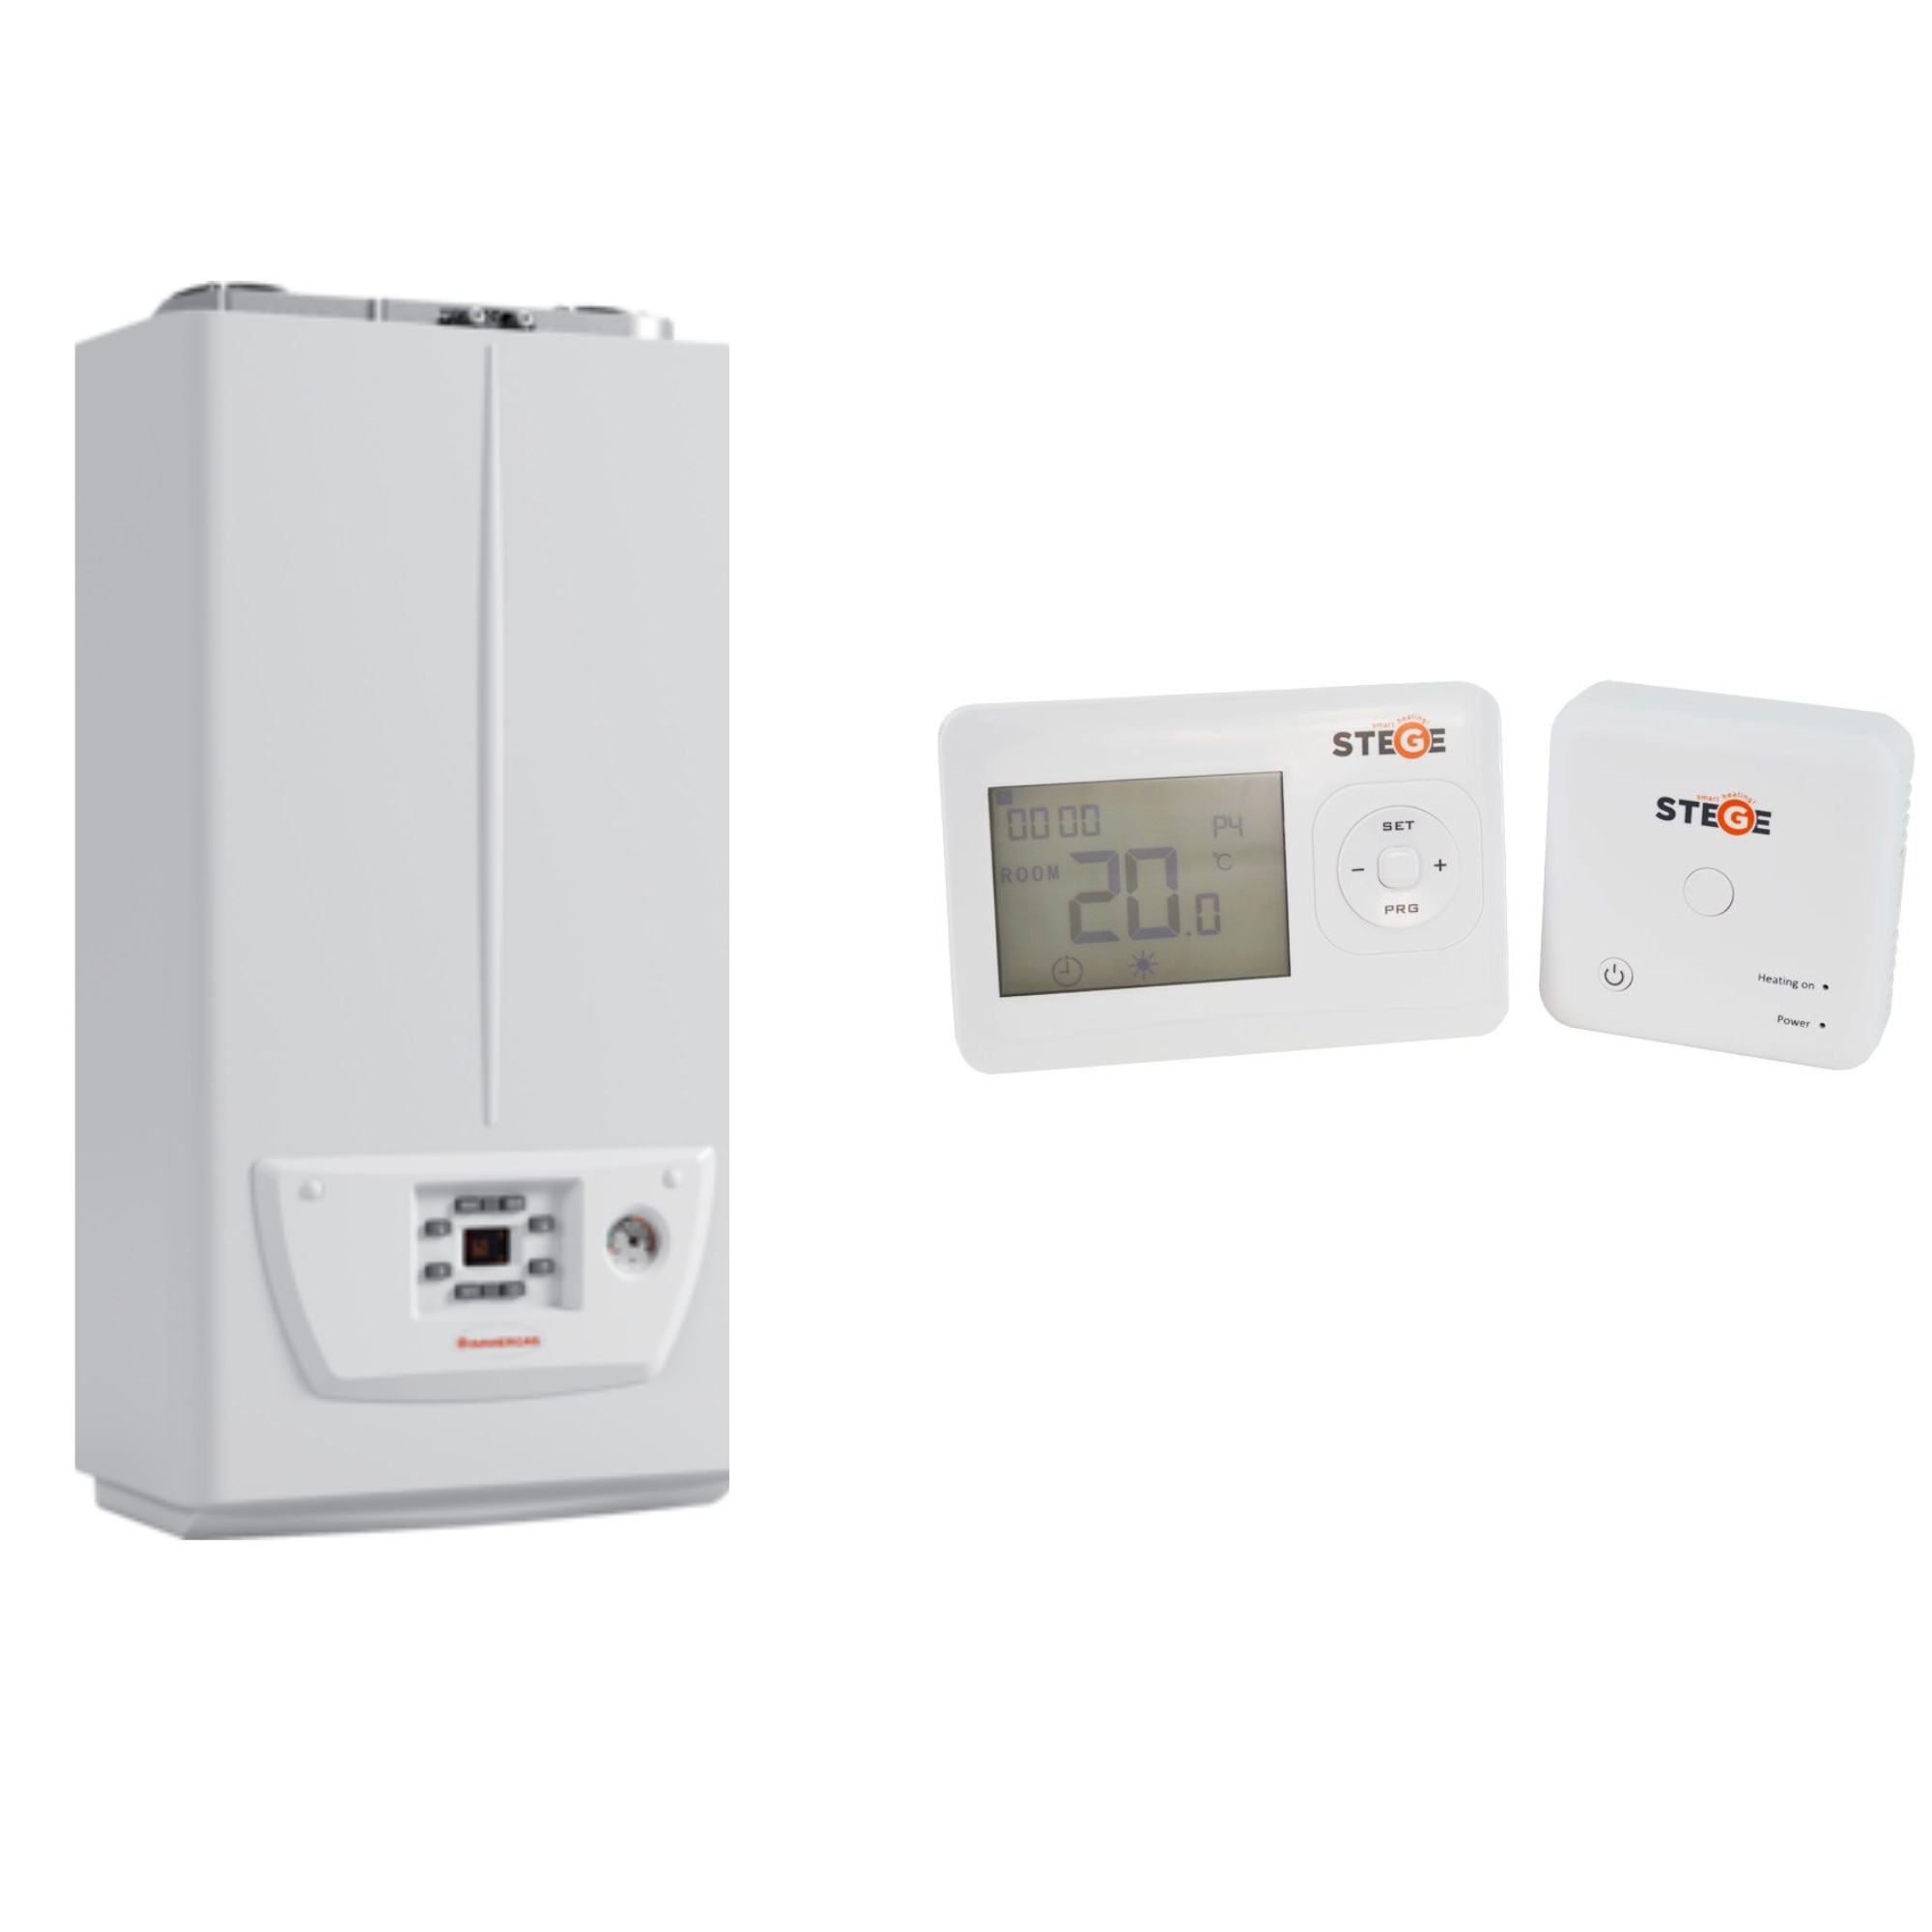 Pachet centrala termica IMMERGAS VICTRIX OMNIA 25, kit evacuare si termostat ambient STEGE WT 200 RF inclus